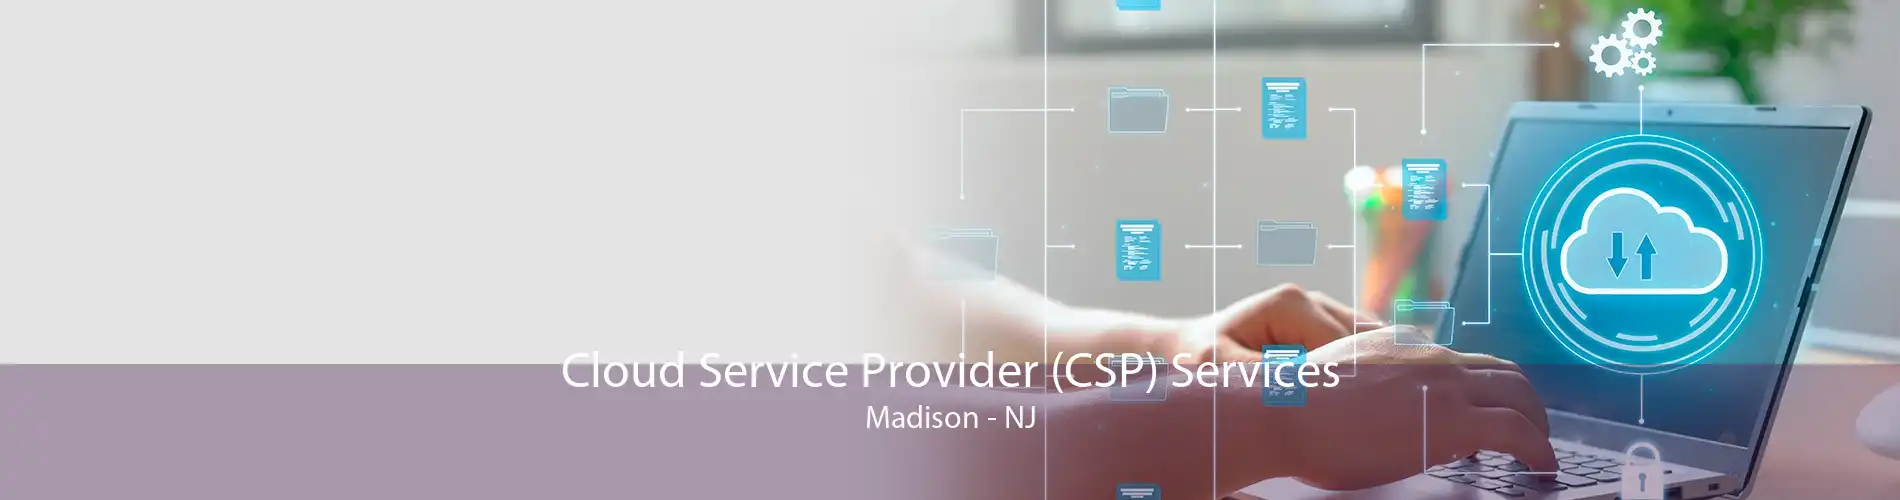 Cloud Service Provider (CSP) Services Madison - NJ